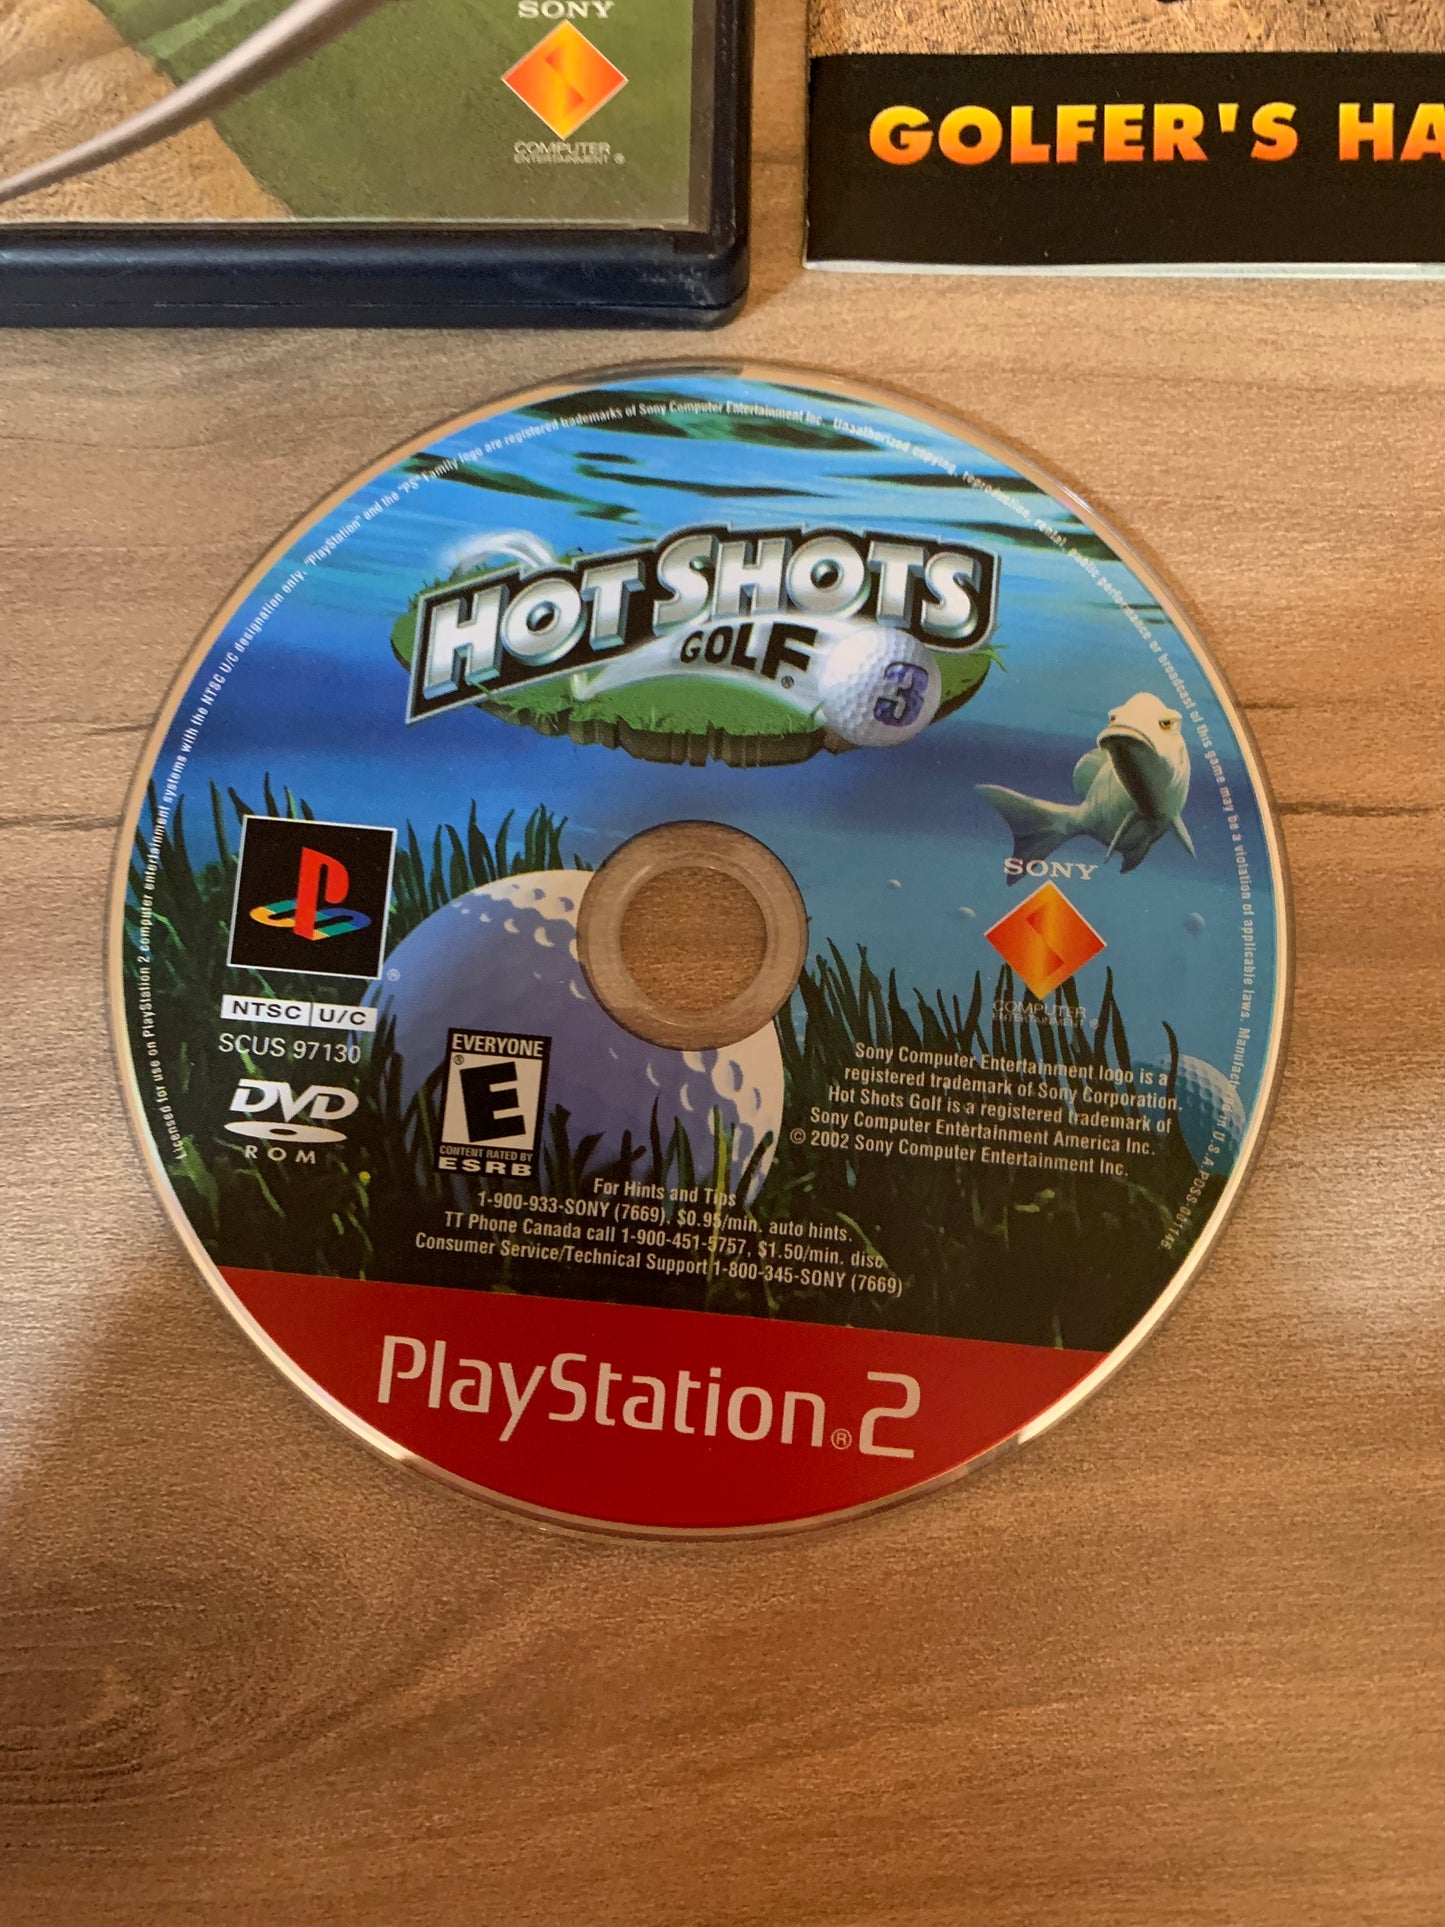 SONY PLAYSTATiON 2 [PS2] | HOT SHOTS GOLF 3 | GREATEST HiTS